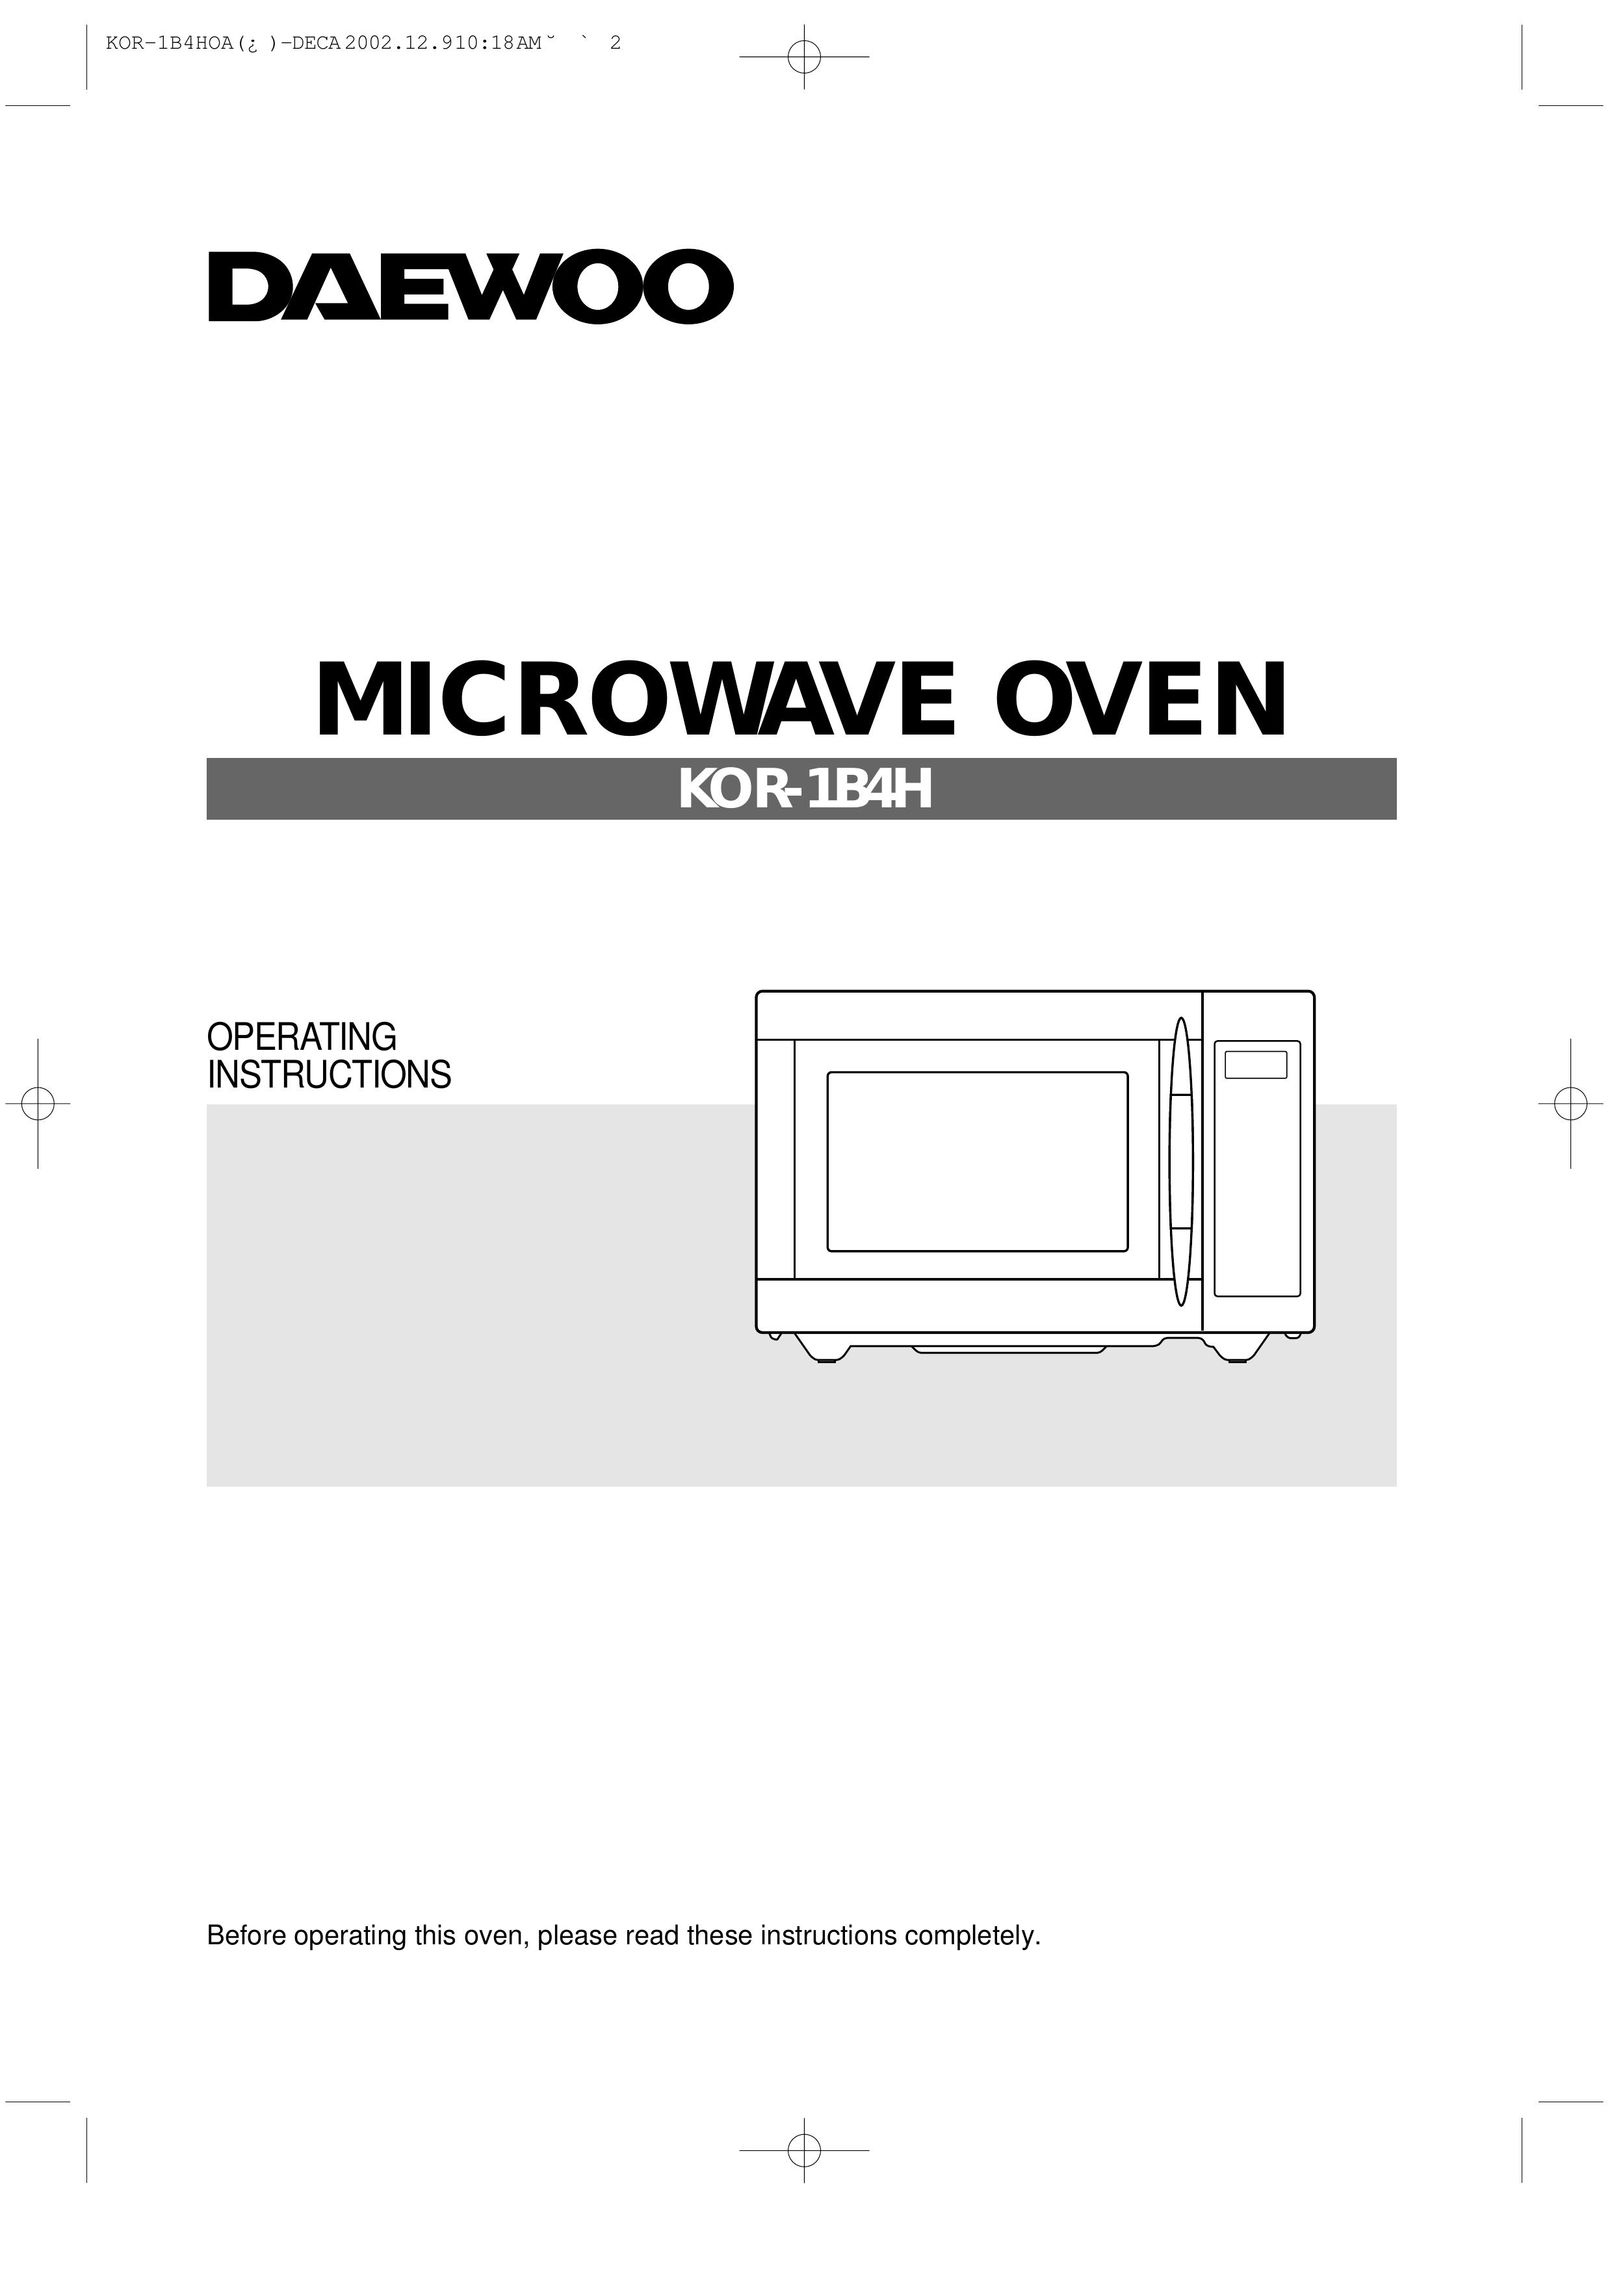 Daewoo KOR-1B4H Microwave Oven User Manual